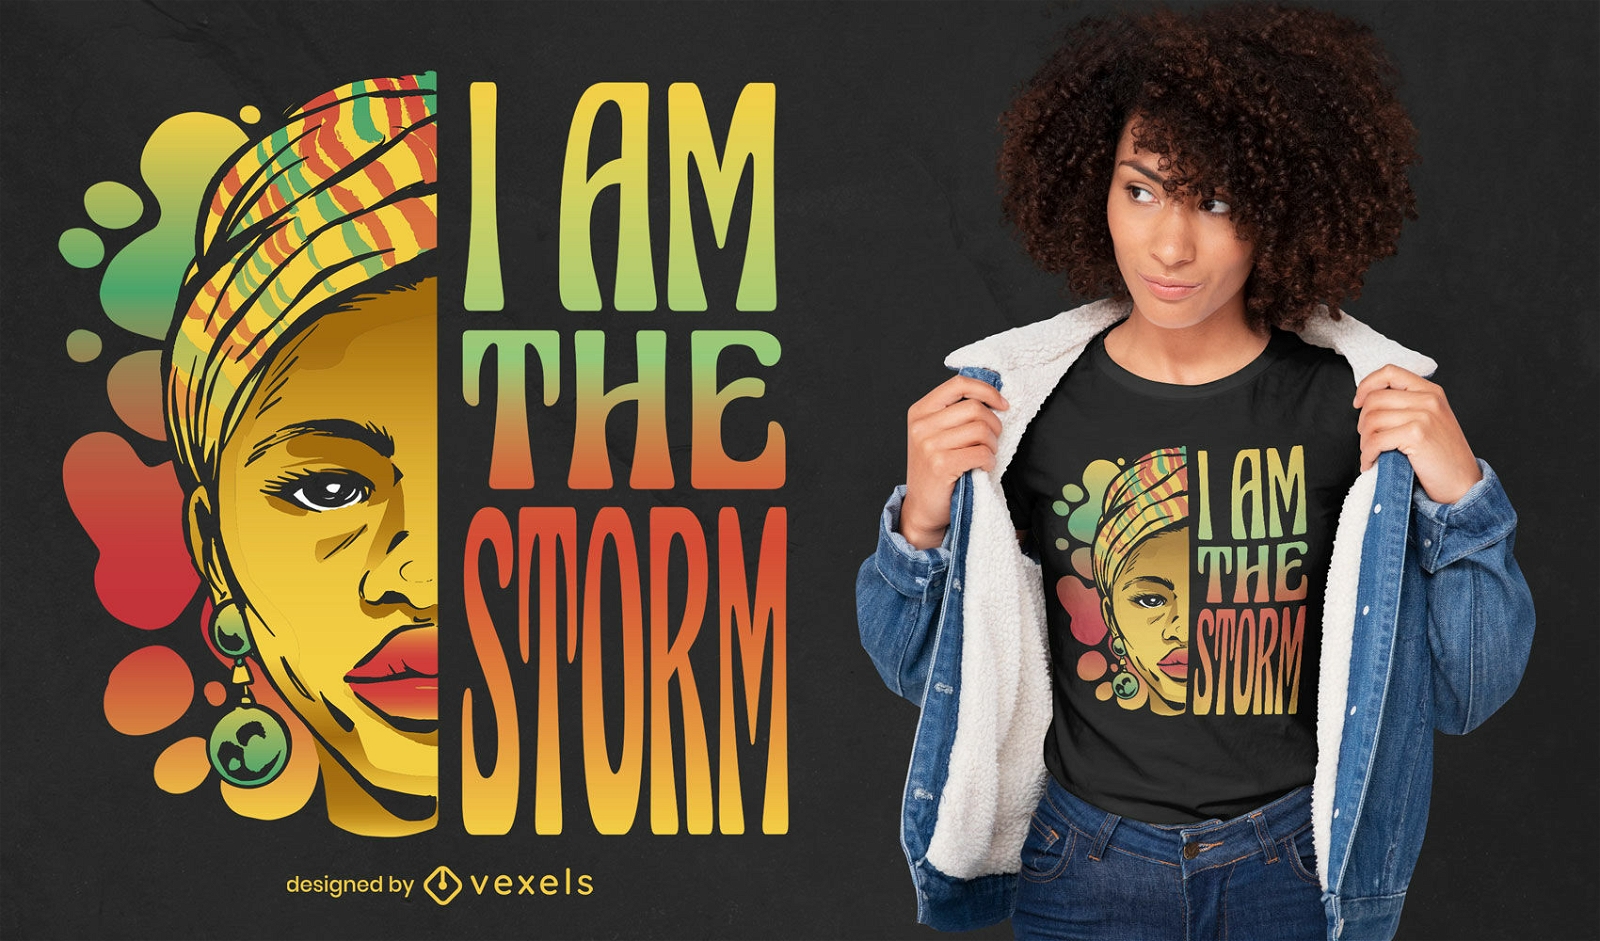 I am the storm Black History Month t-shirt design